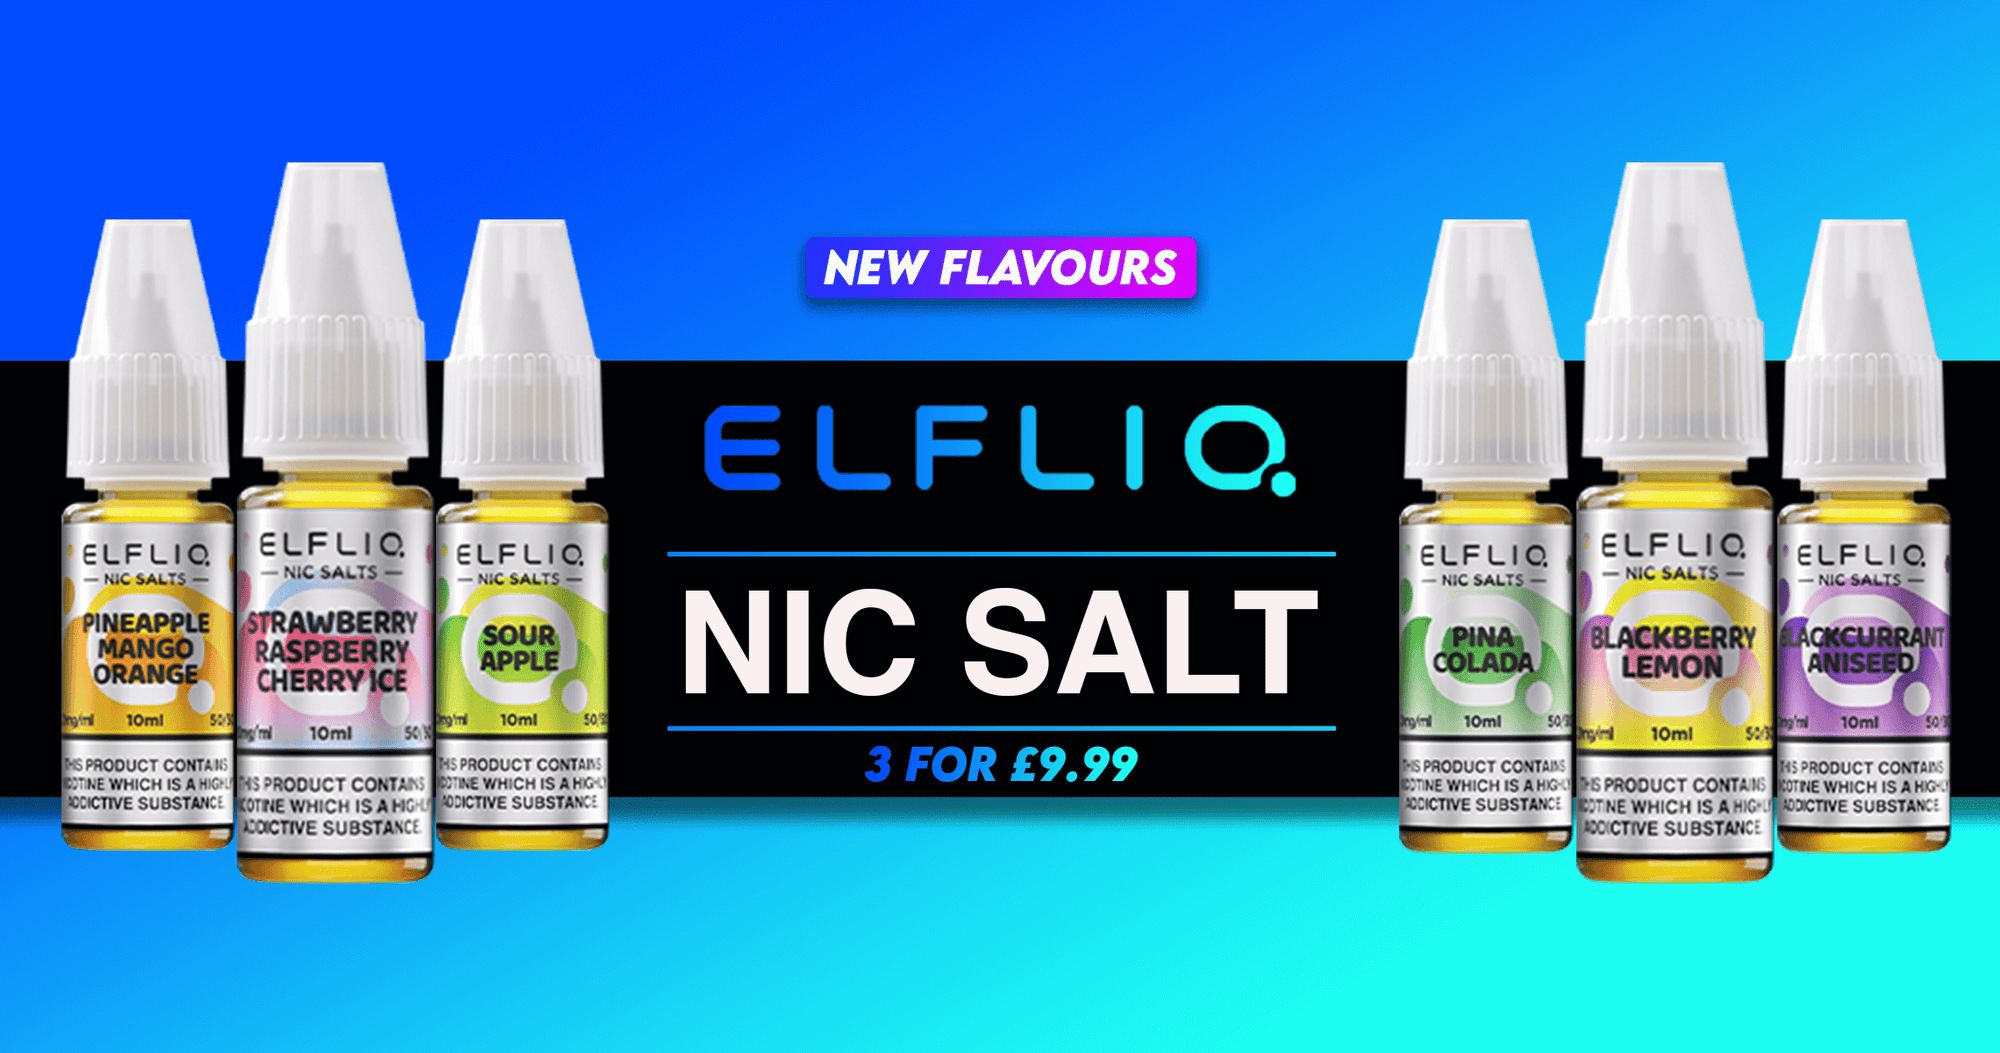 Image of elfliq NIC Salt Best Seller banner showcasing new flavours